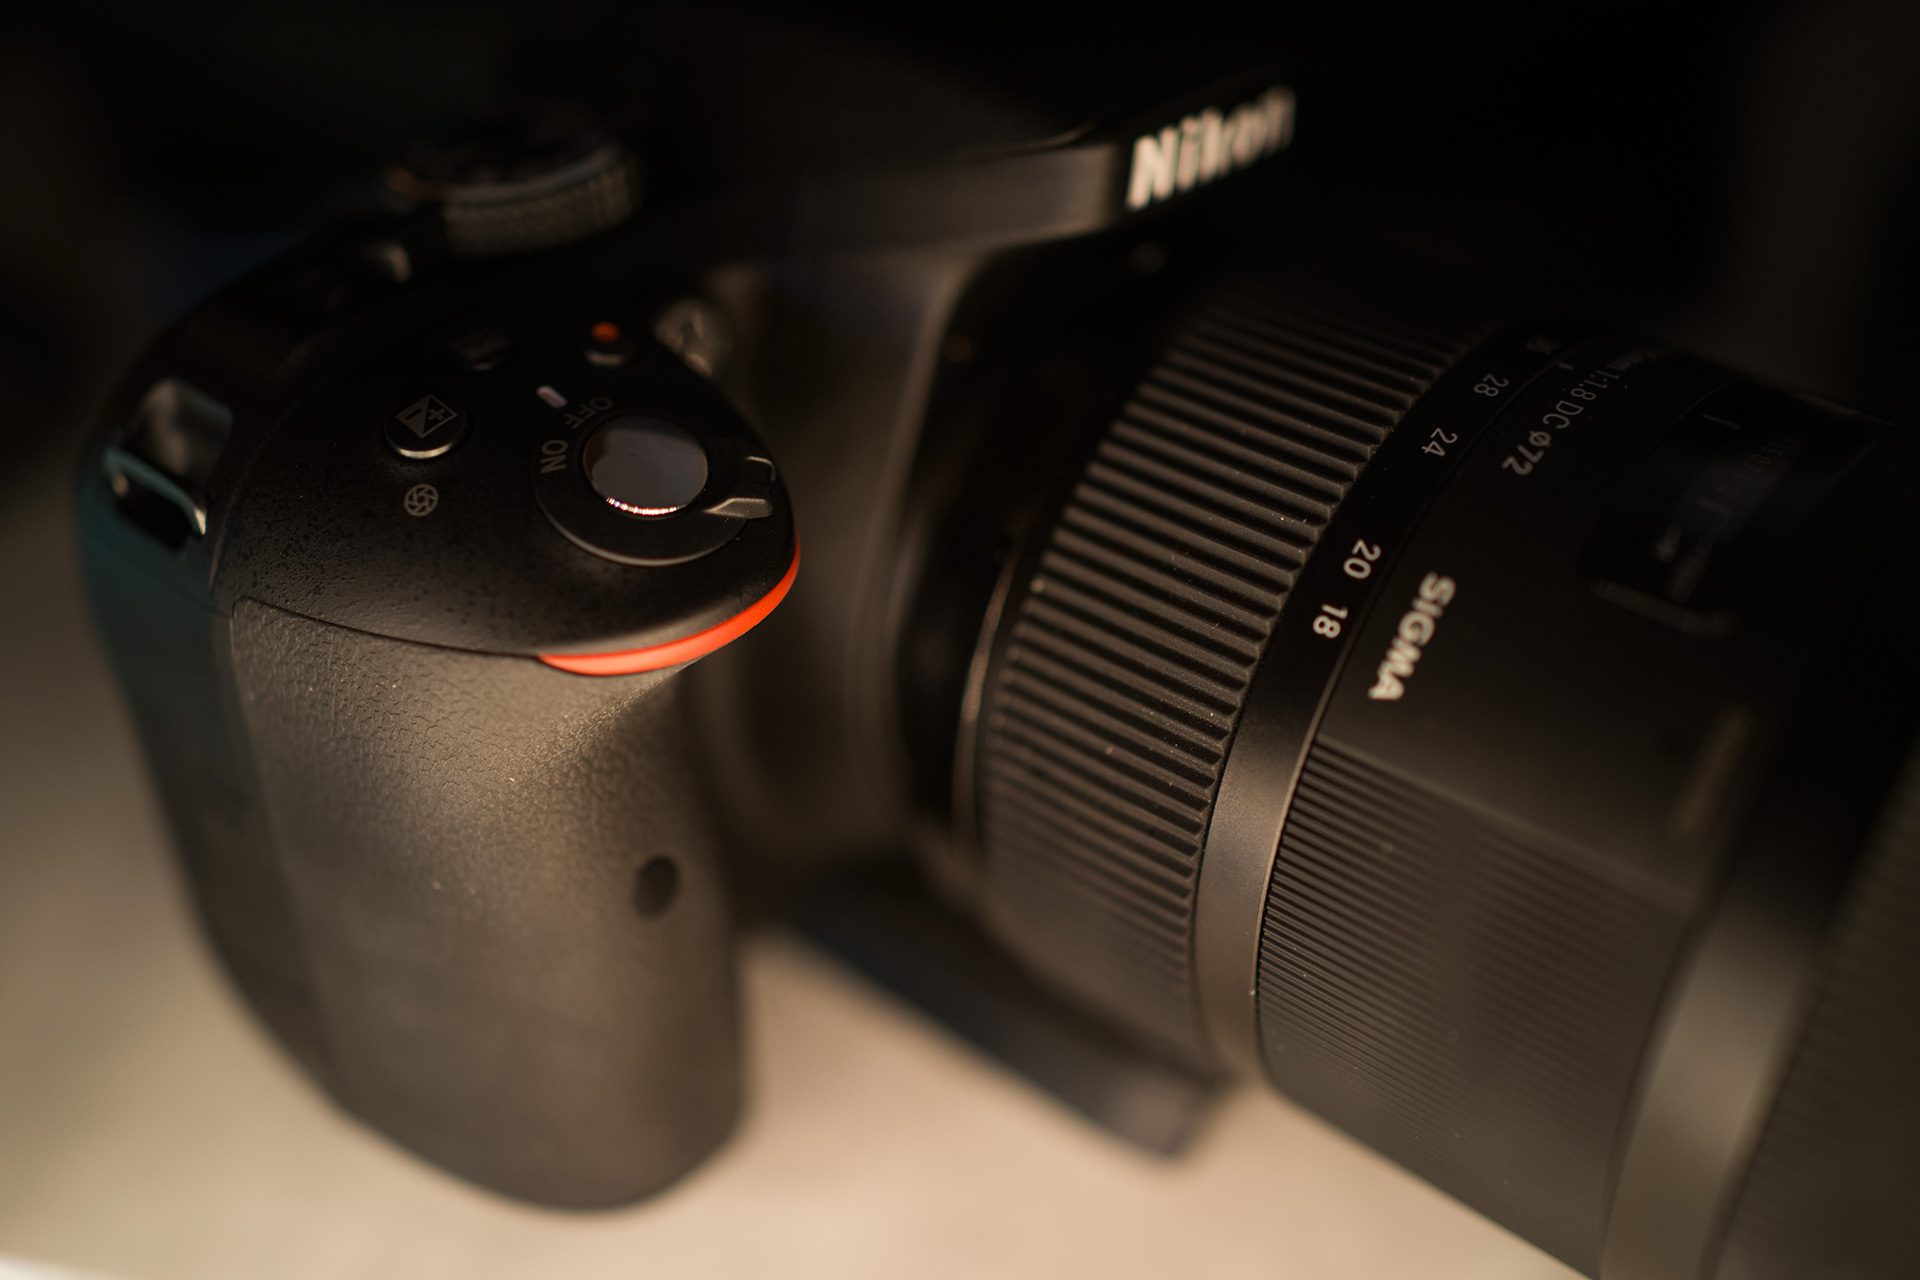 Explore the Revolutionary Features of the Nikon Z9 Camera